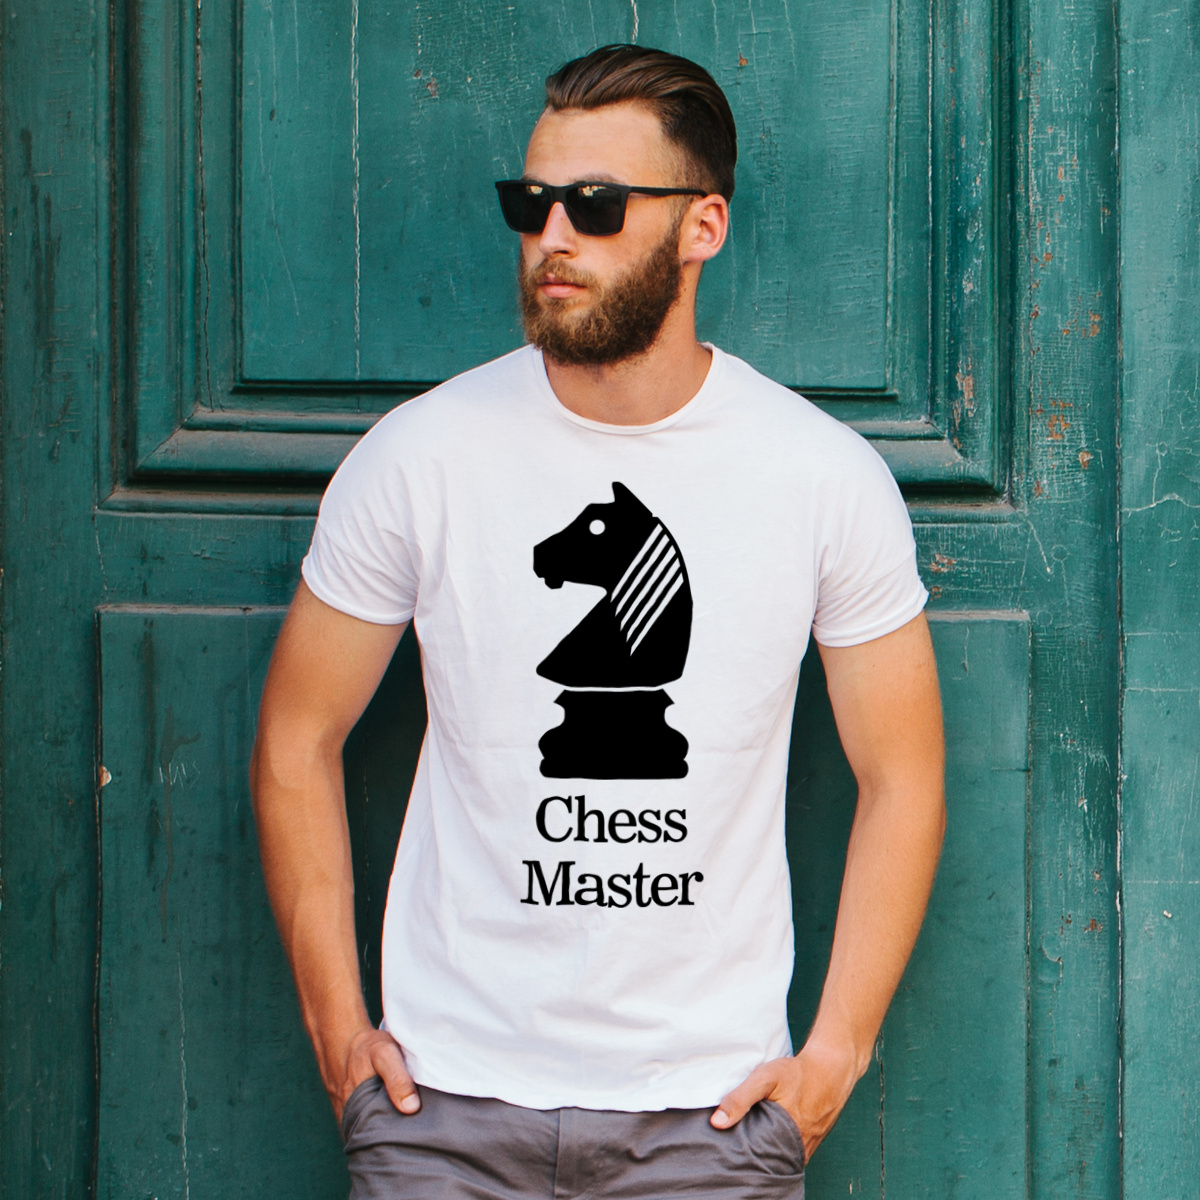 Chess Master - Męska Koszulka Biała